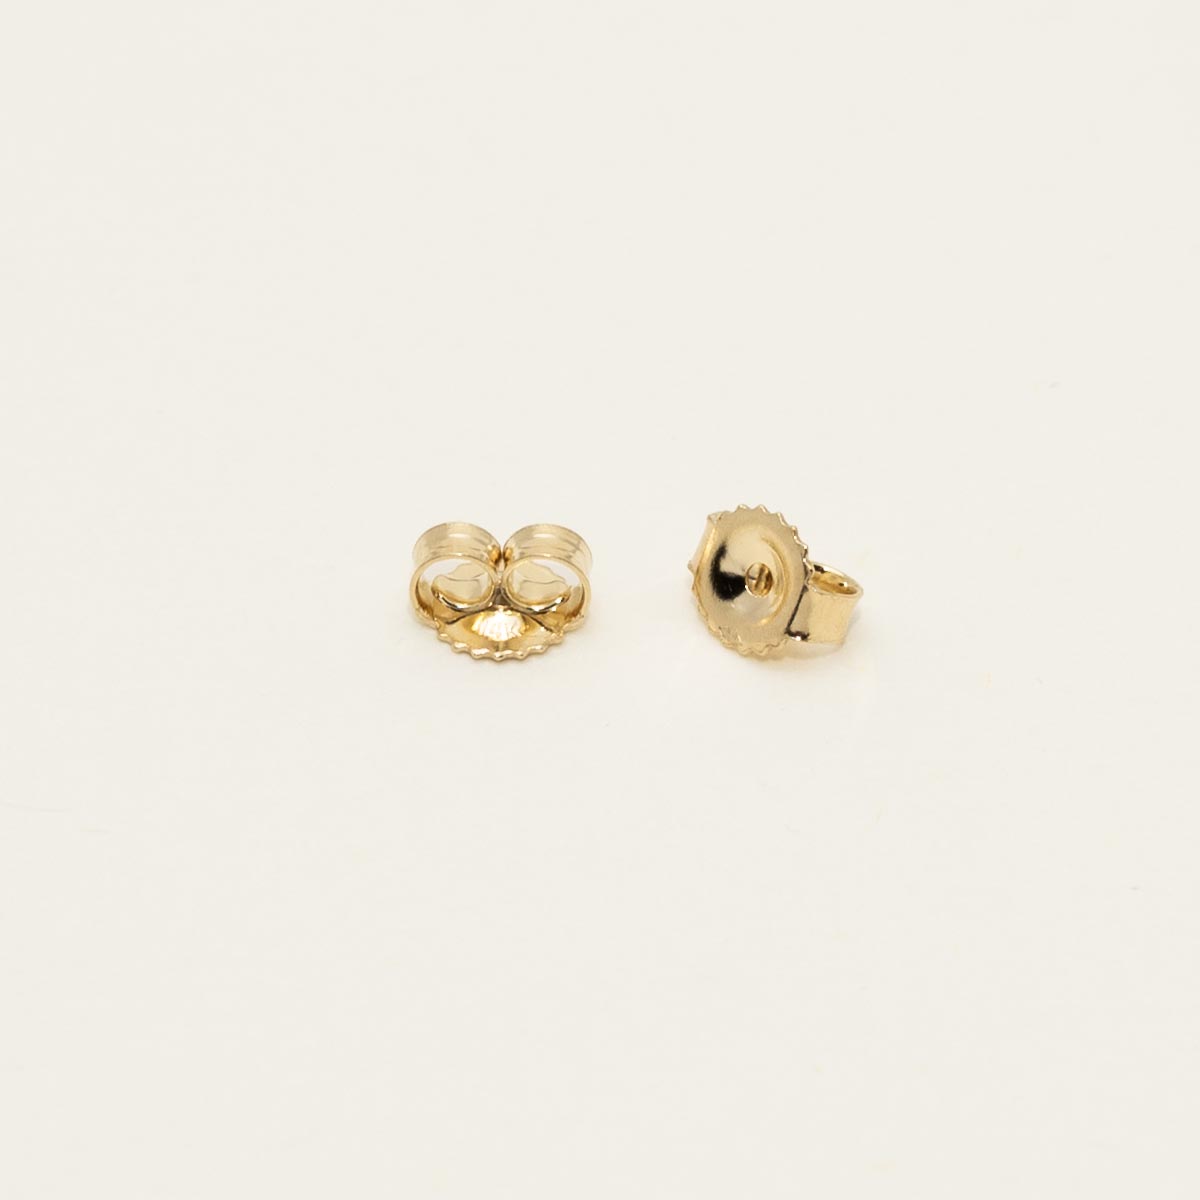 Mastoloni Cultured Akoya Pearl Stud Earrings in 14kt Yellow Gold (5.5-6mm pearls)